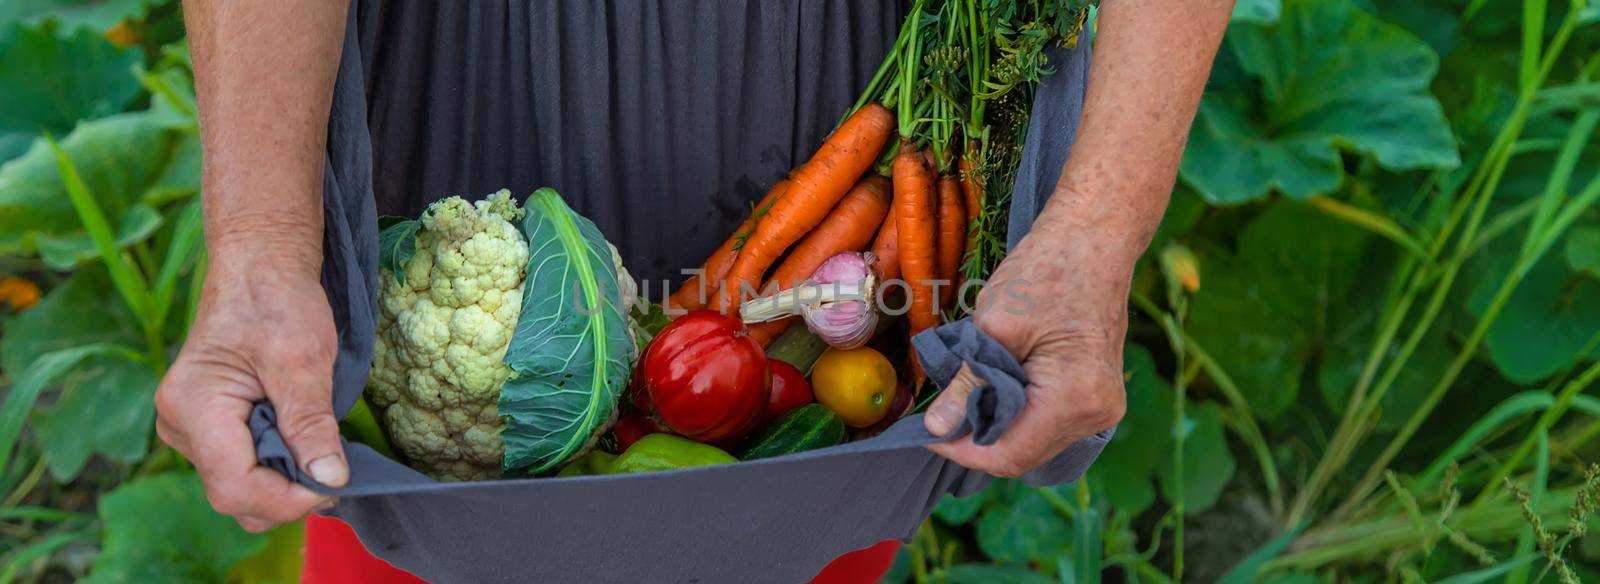 Senior woman harvesting vegetables in the garden. Selective focus. Food.